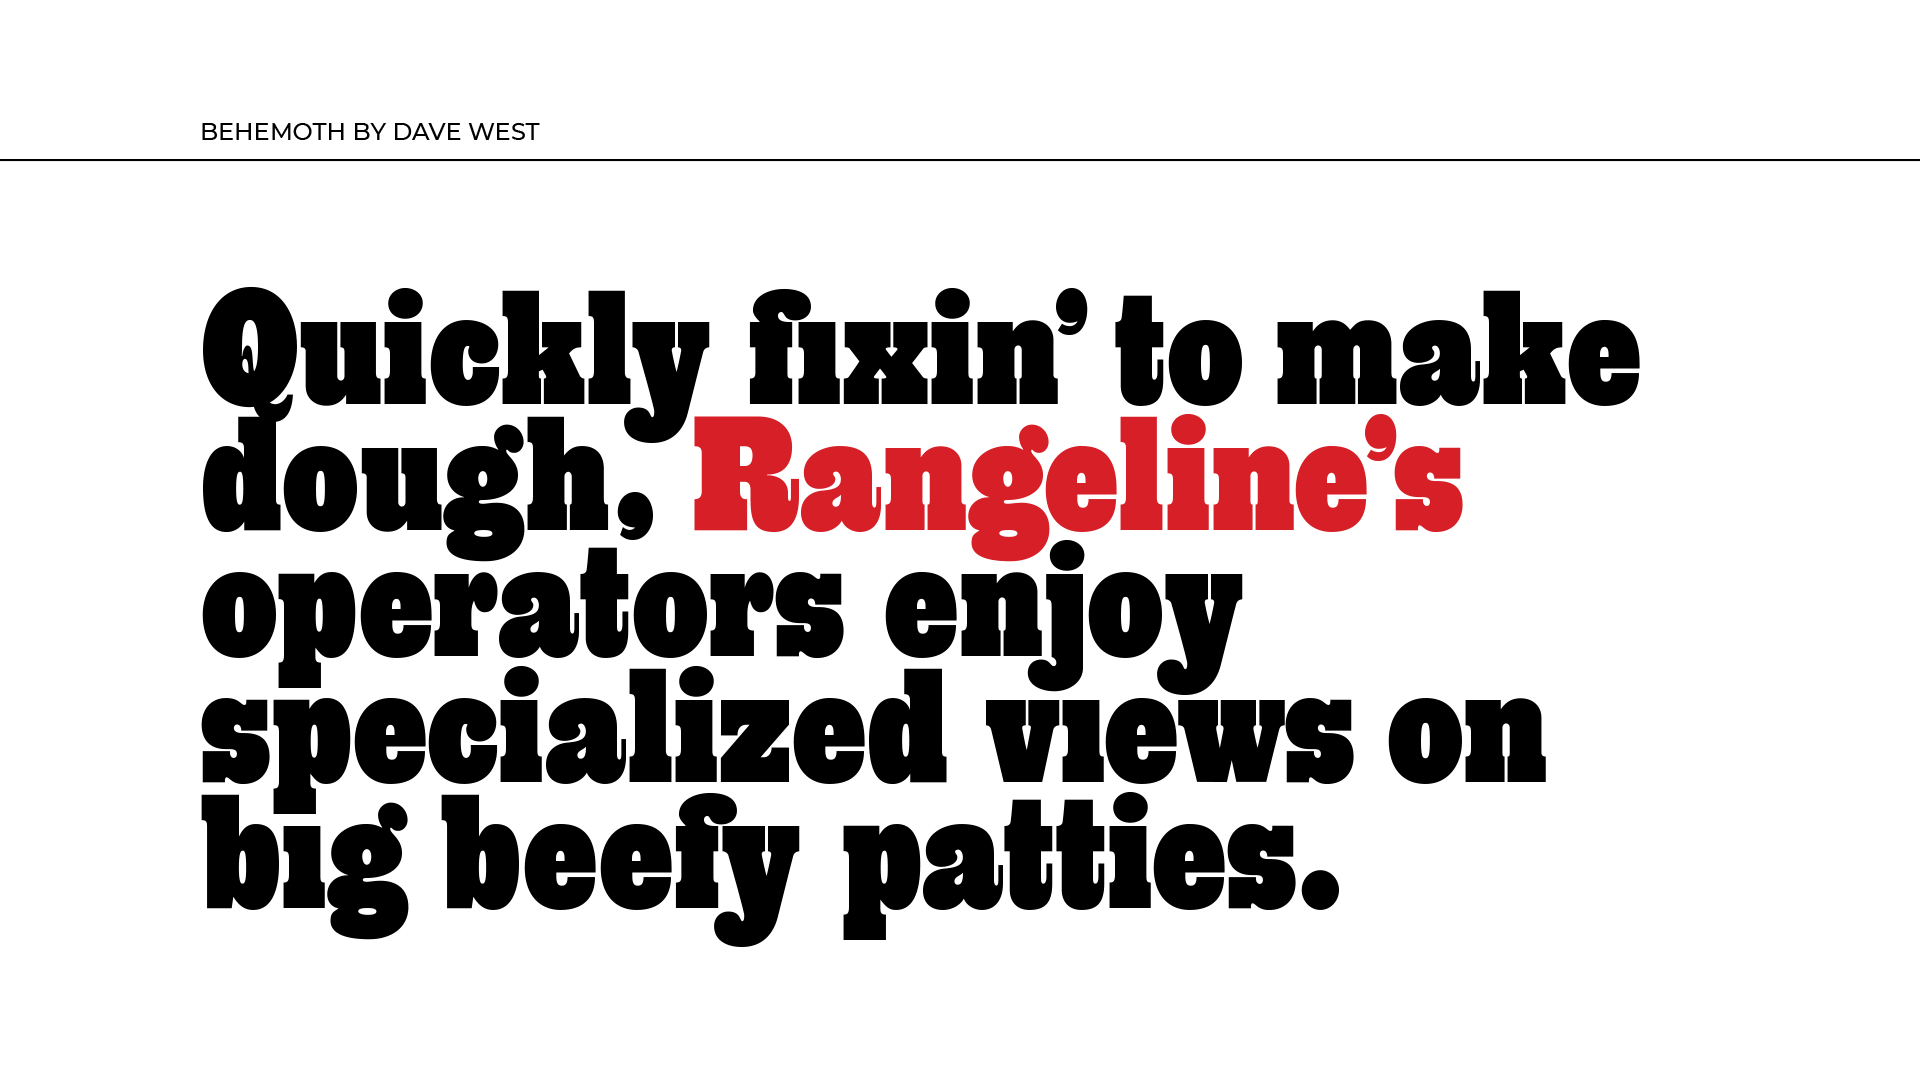 Rangeline Behemoth Type Specimen Pangram: Quickly fixin’ to make dough, Rangeline’s operators enjoy specialized views on big beefy patties.